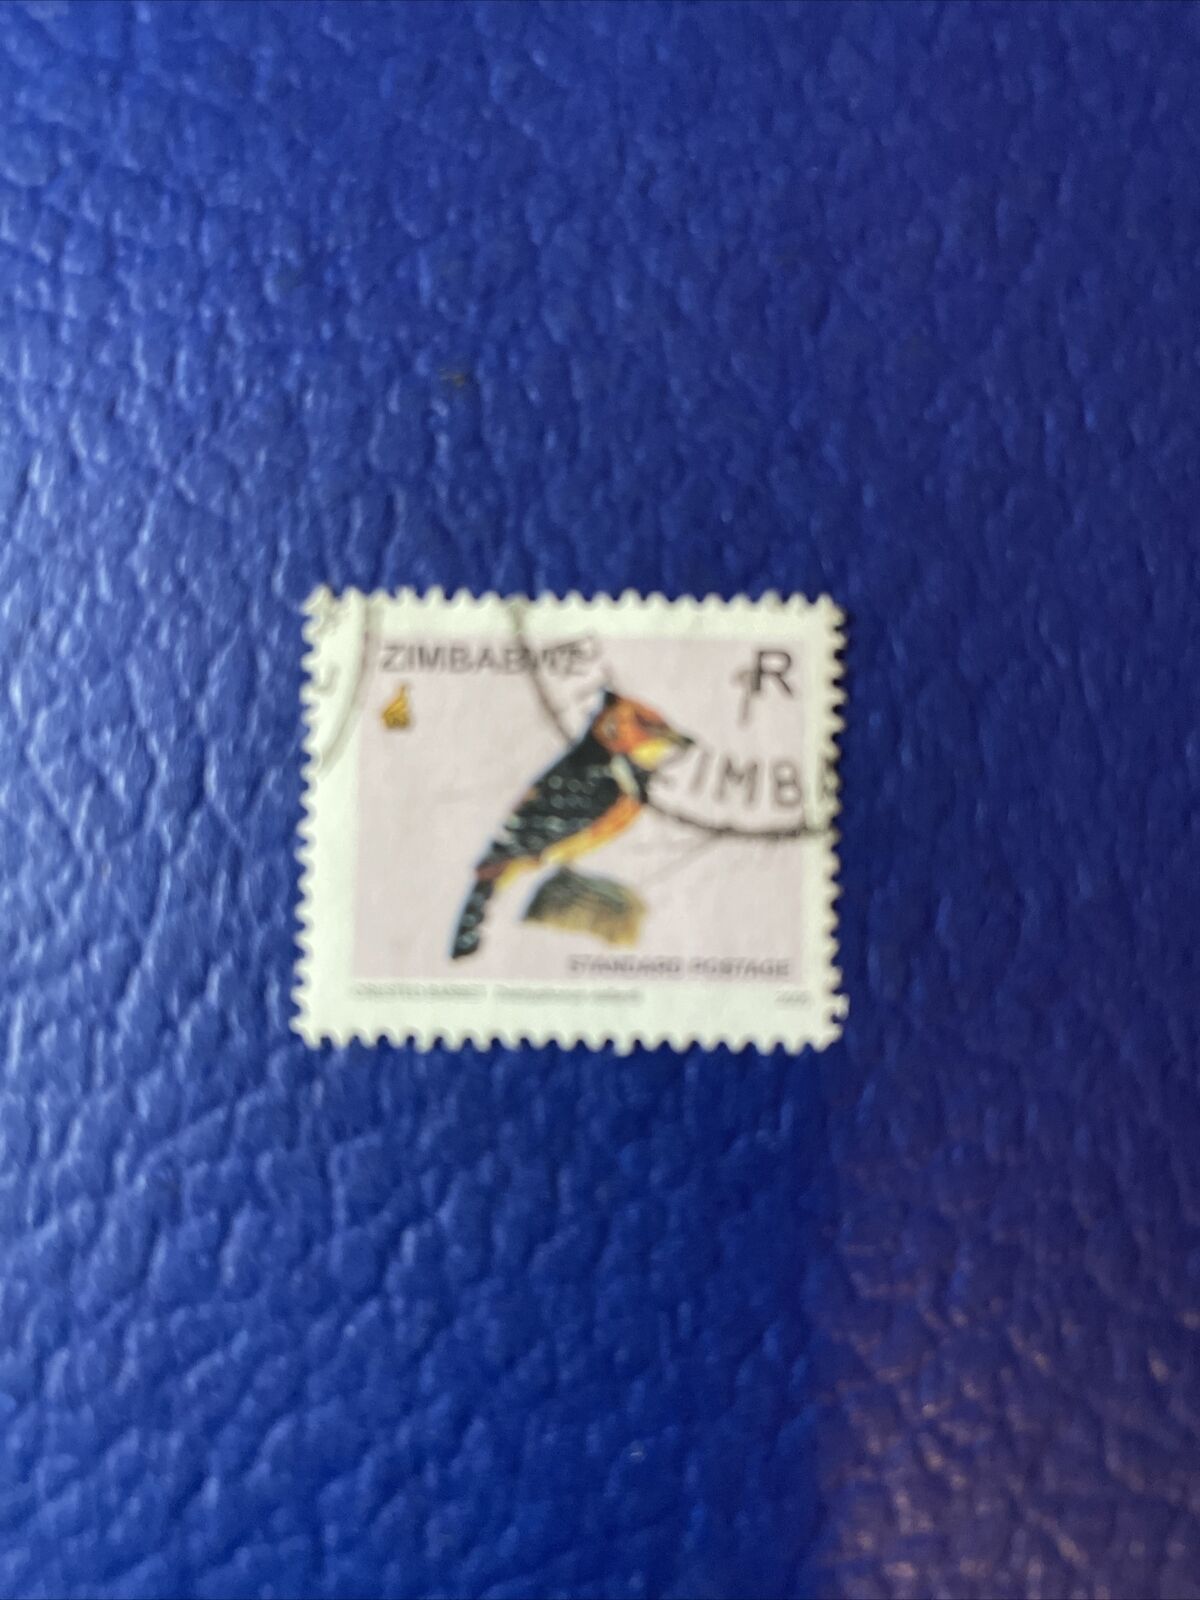 Zimbabwe Stamp 983